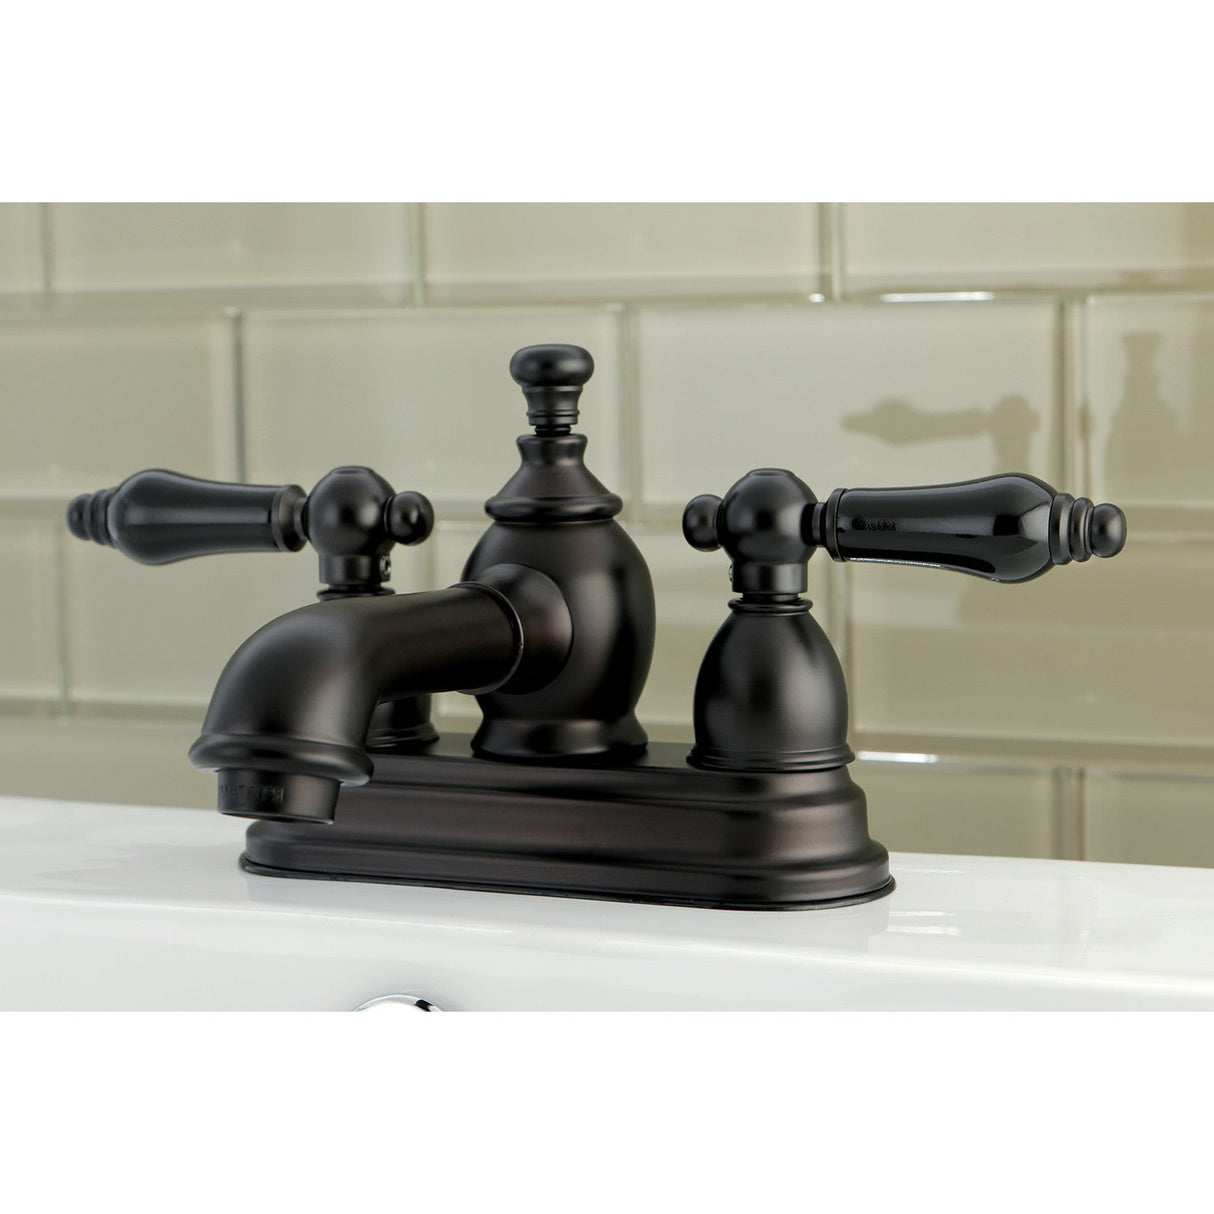 Duchess KS7005PKL Two-Handle 3-Hole Deck Mount 4" Centerset Bathroom Faucet with Brass Pop-Up, Oil Rubbed Bronze